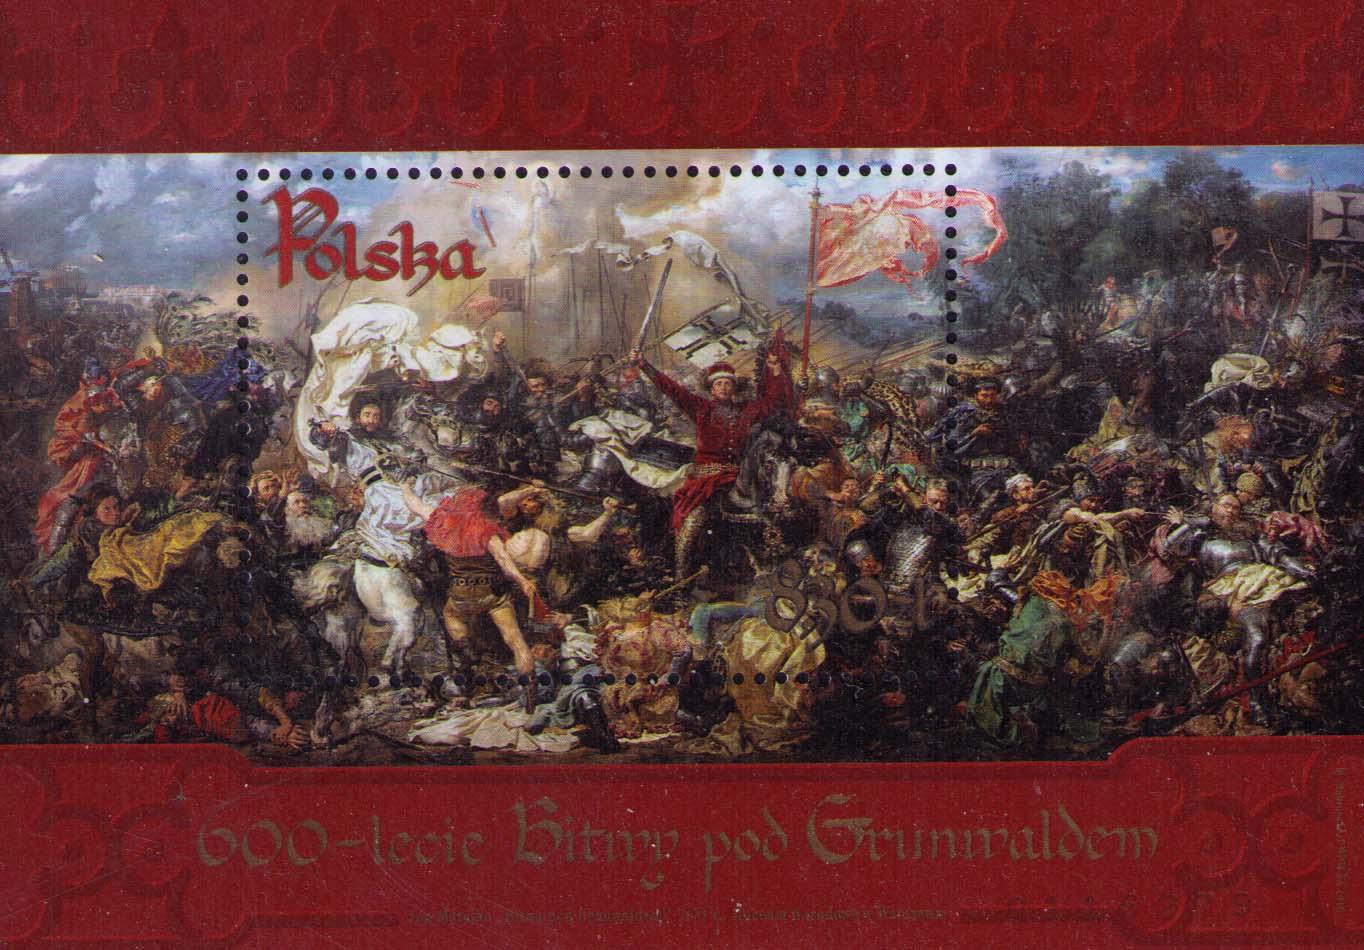 The Battle of Grunwald